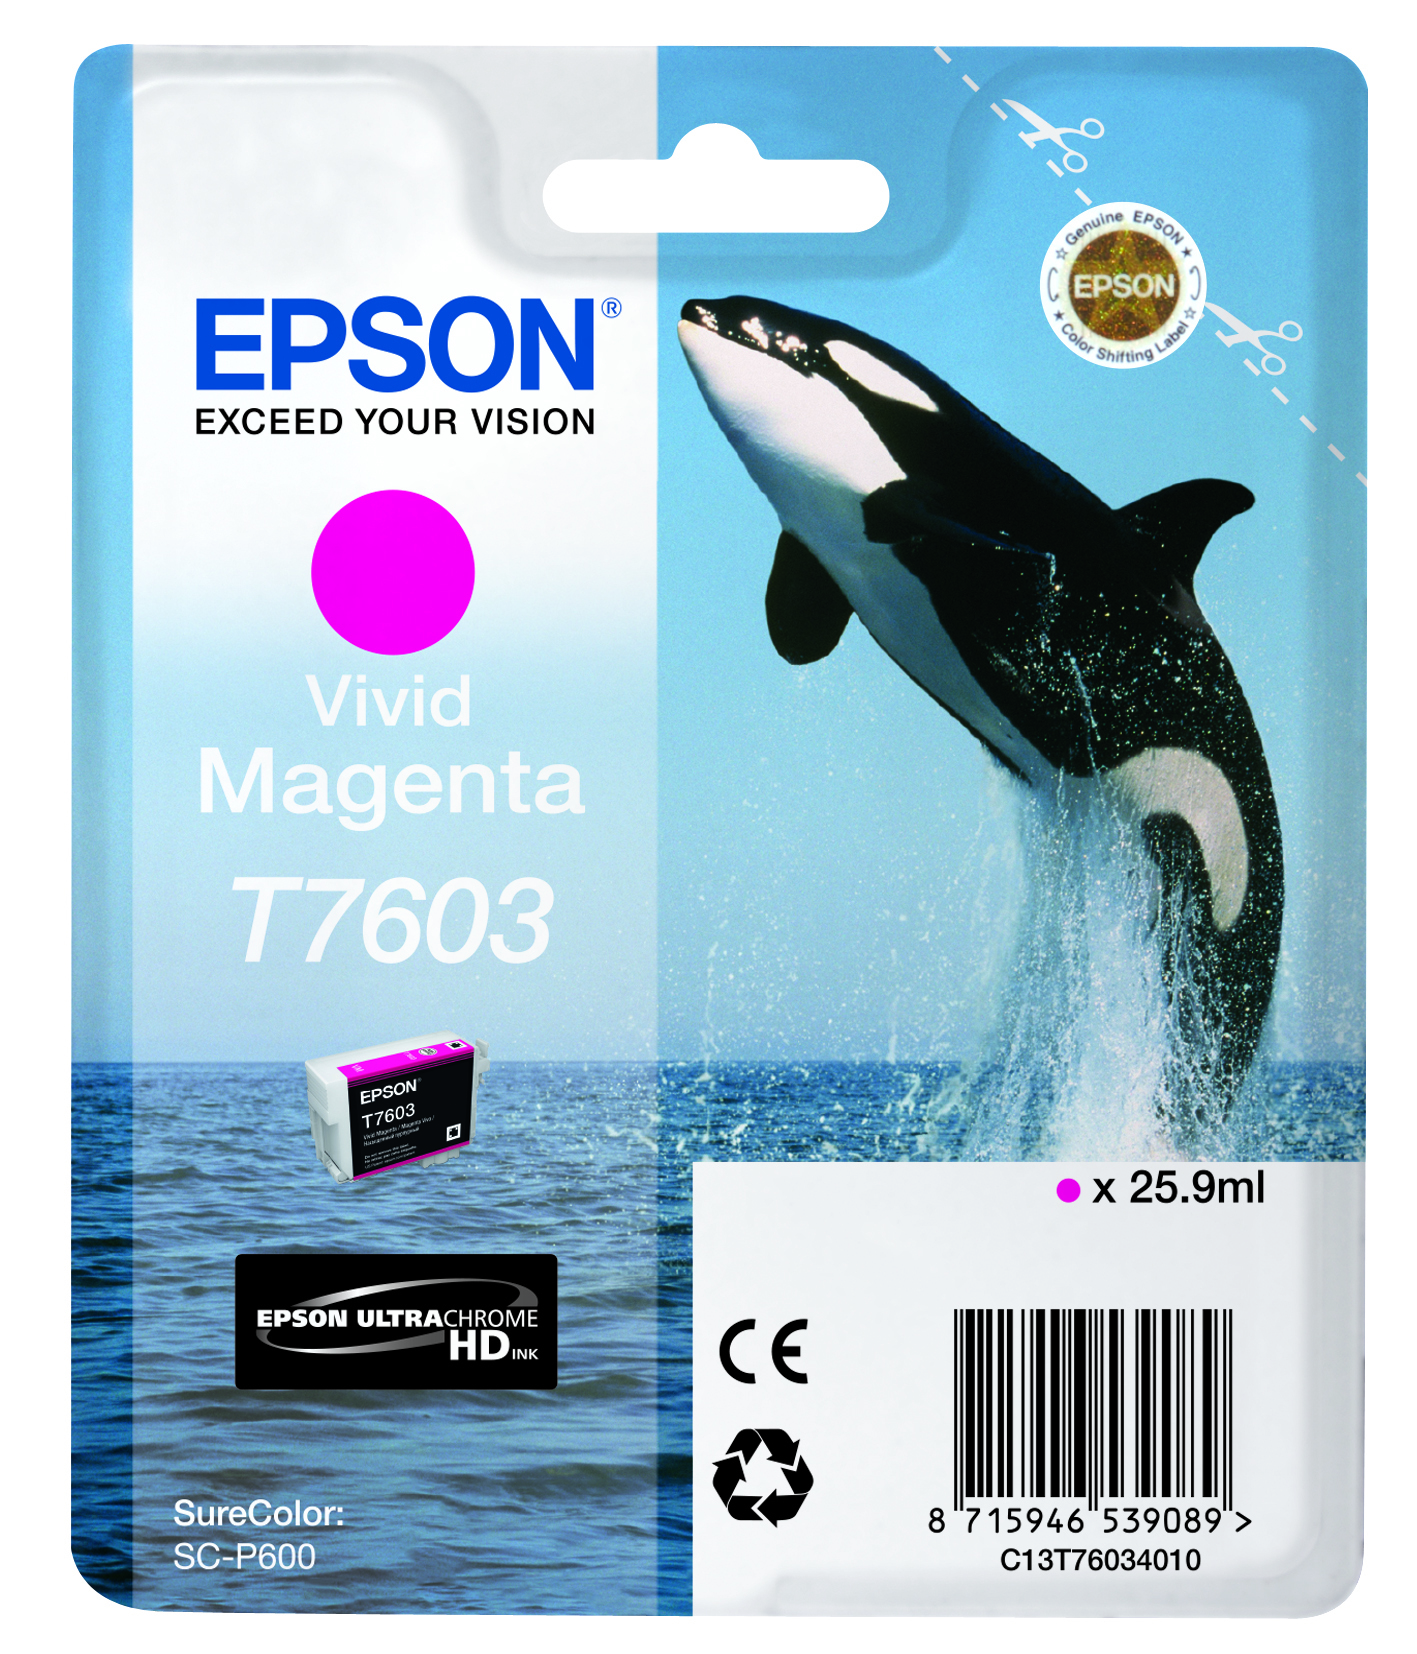 Epson T7603 vivid magenta single pack / Helder magenta